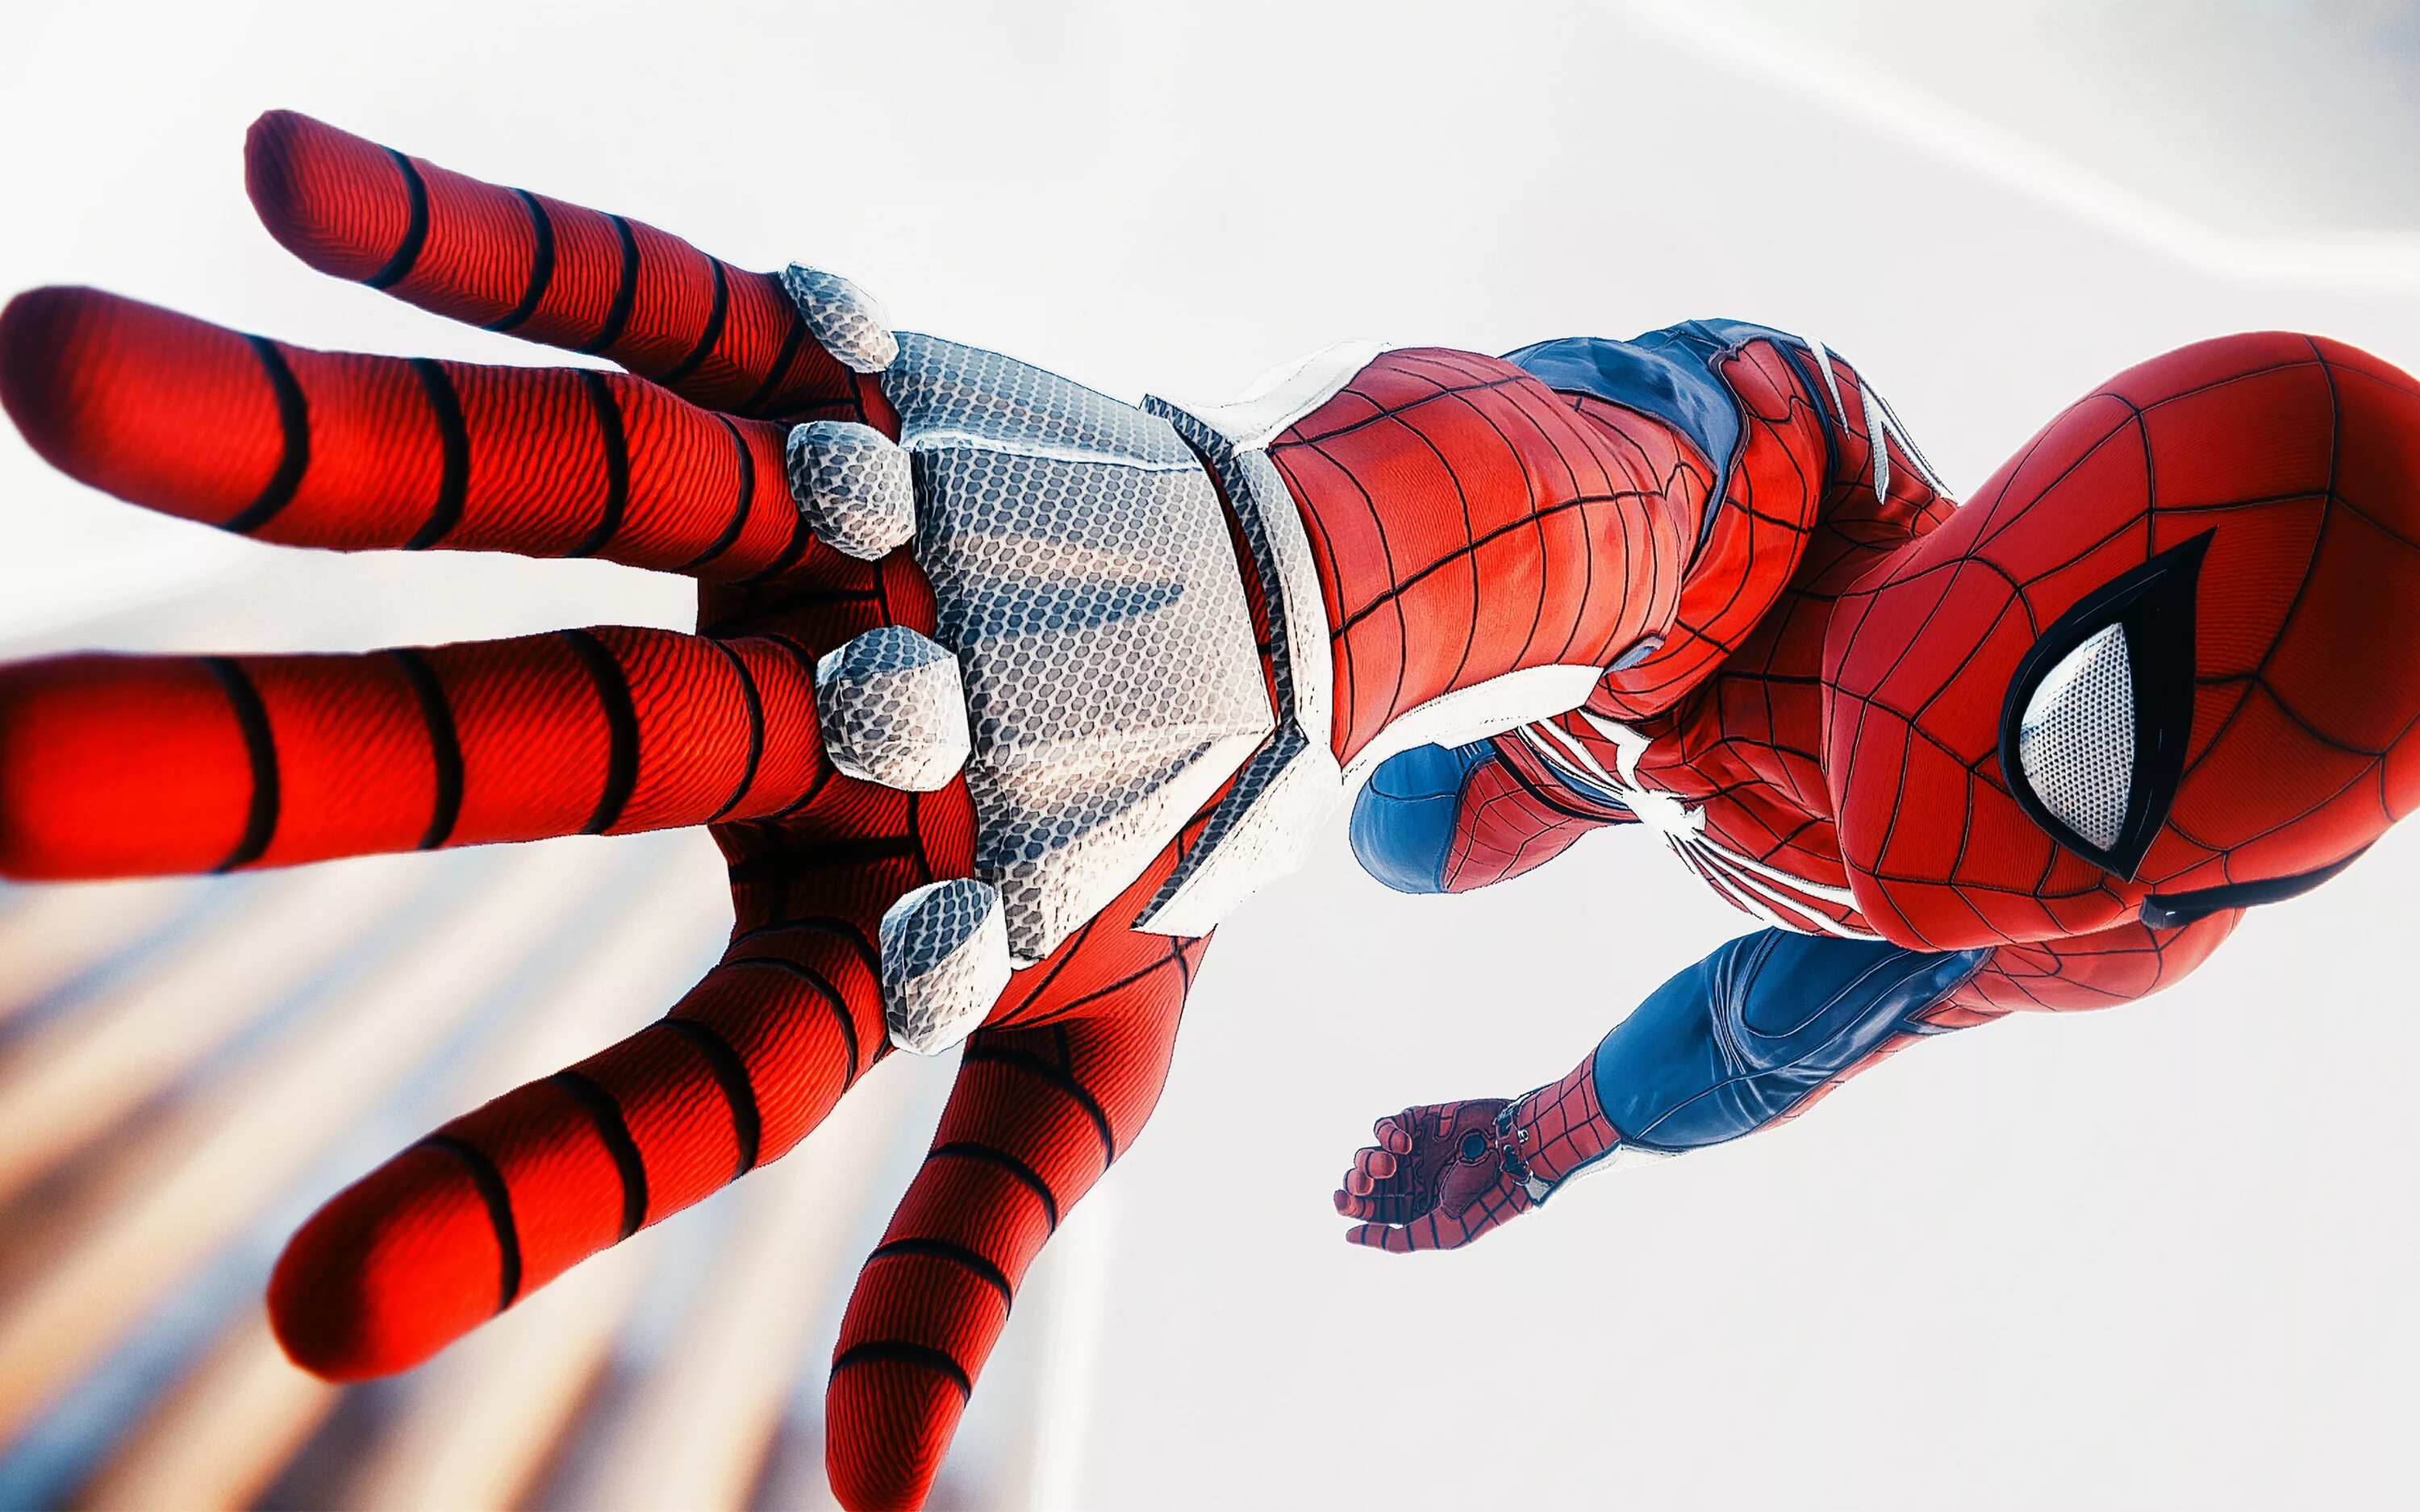 Spiderman. Spider man ps4. Паук спидер ман. Человек паук РС 4. Spider man ps4 Advanced Suit.